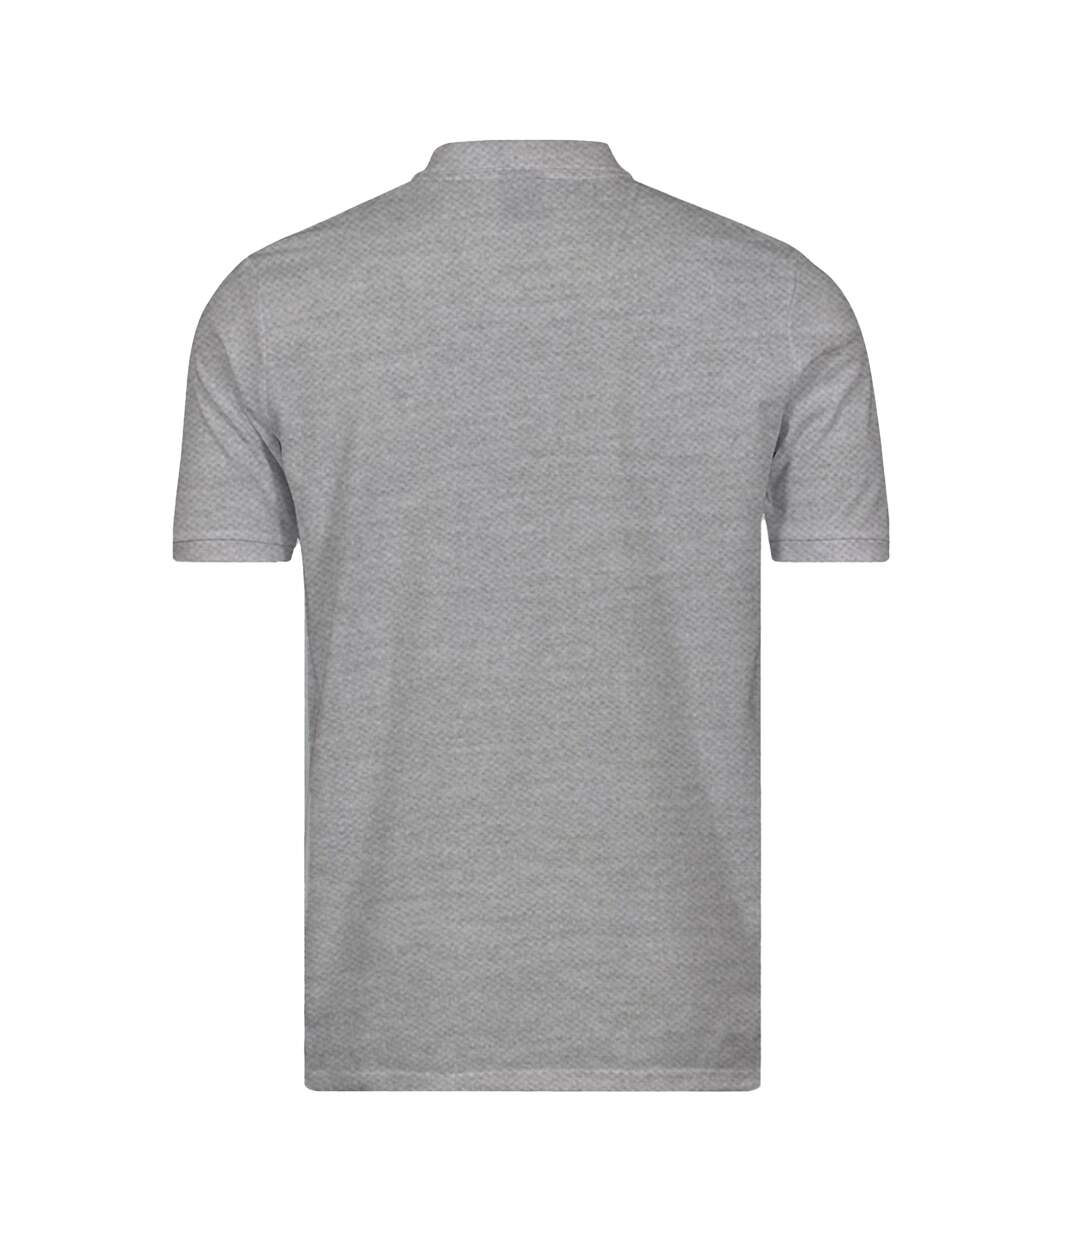 B&C Mens Heavymill Short Sleeve Cotton Polo Shirt (Heather Grey)